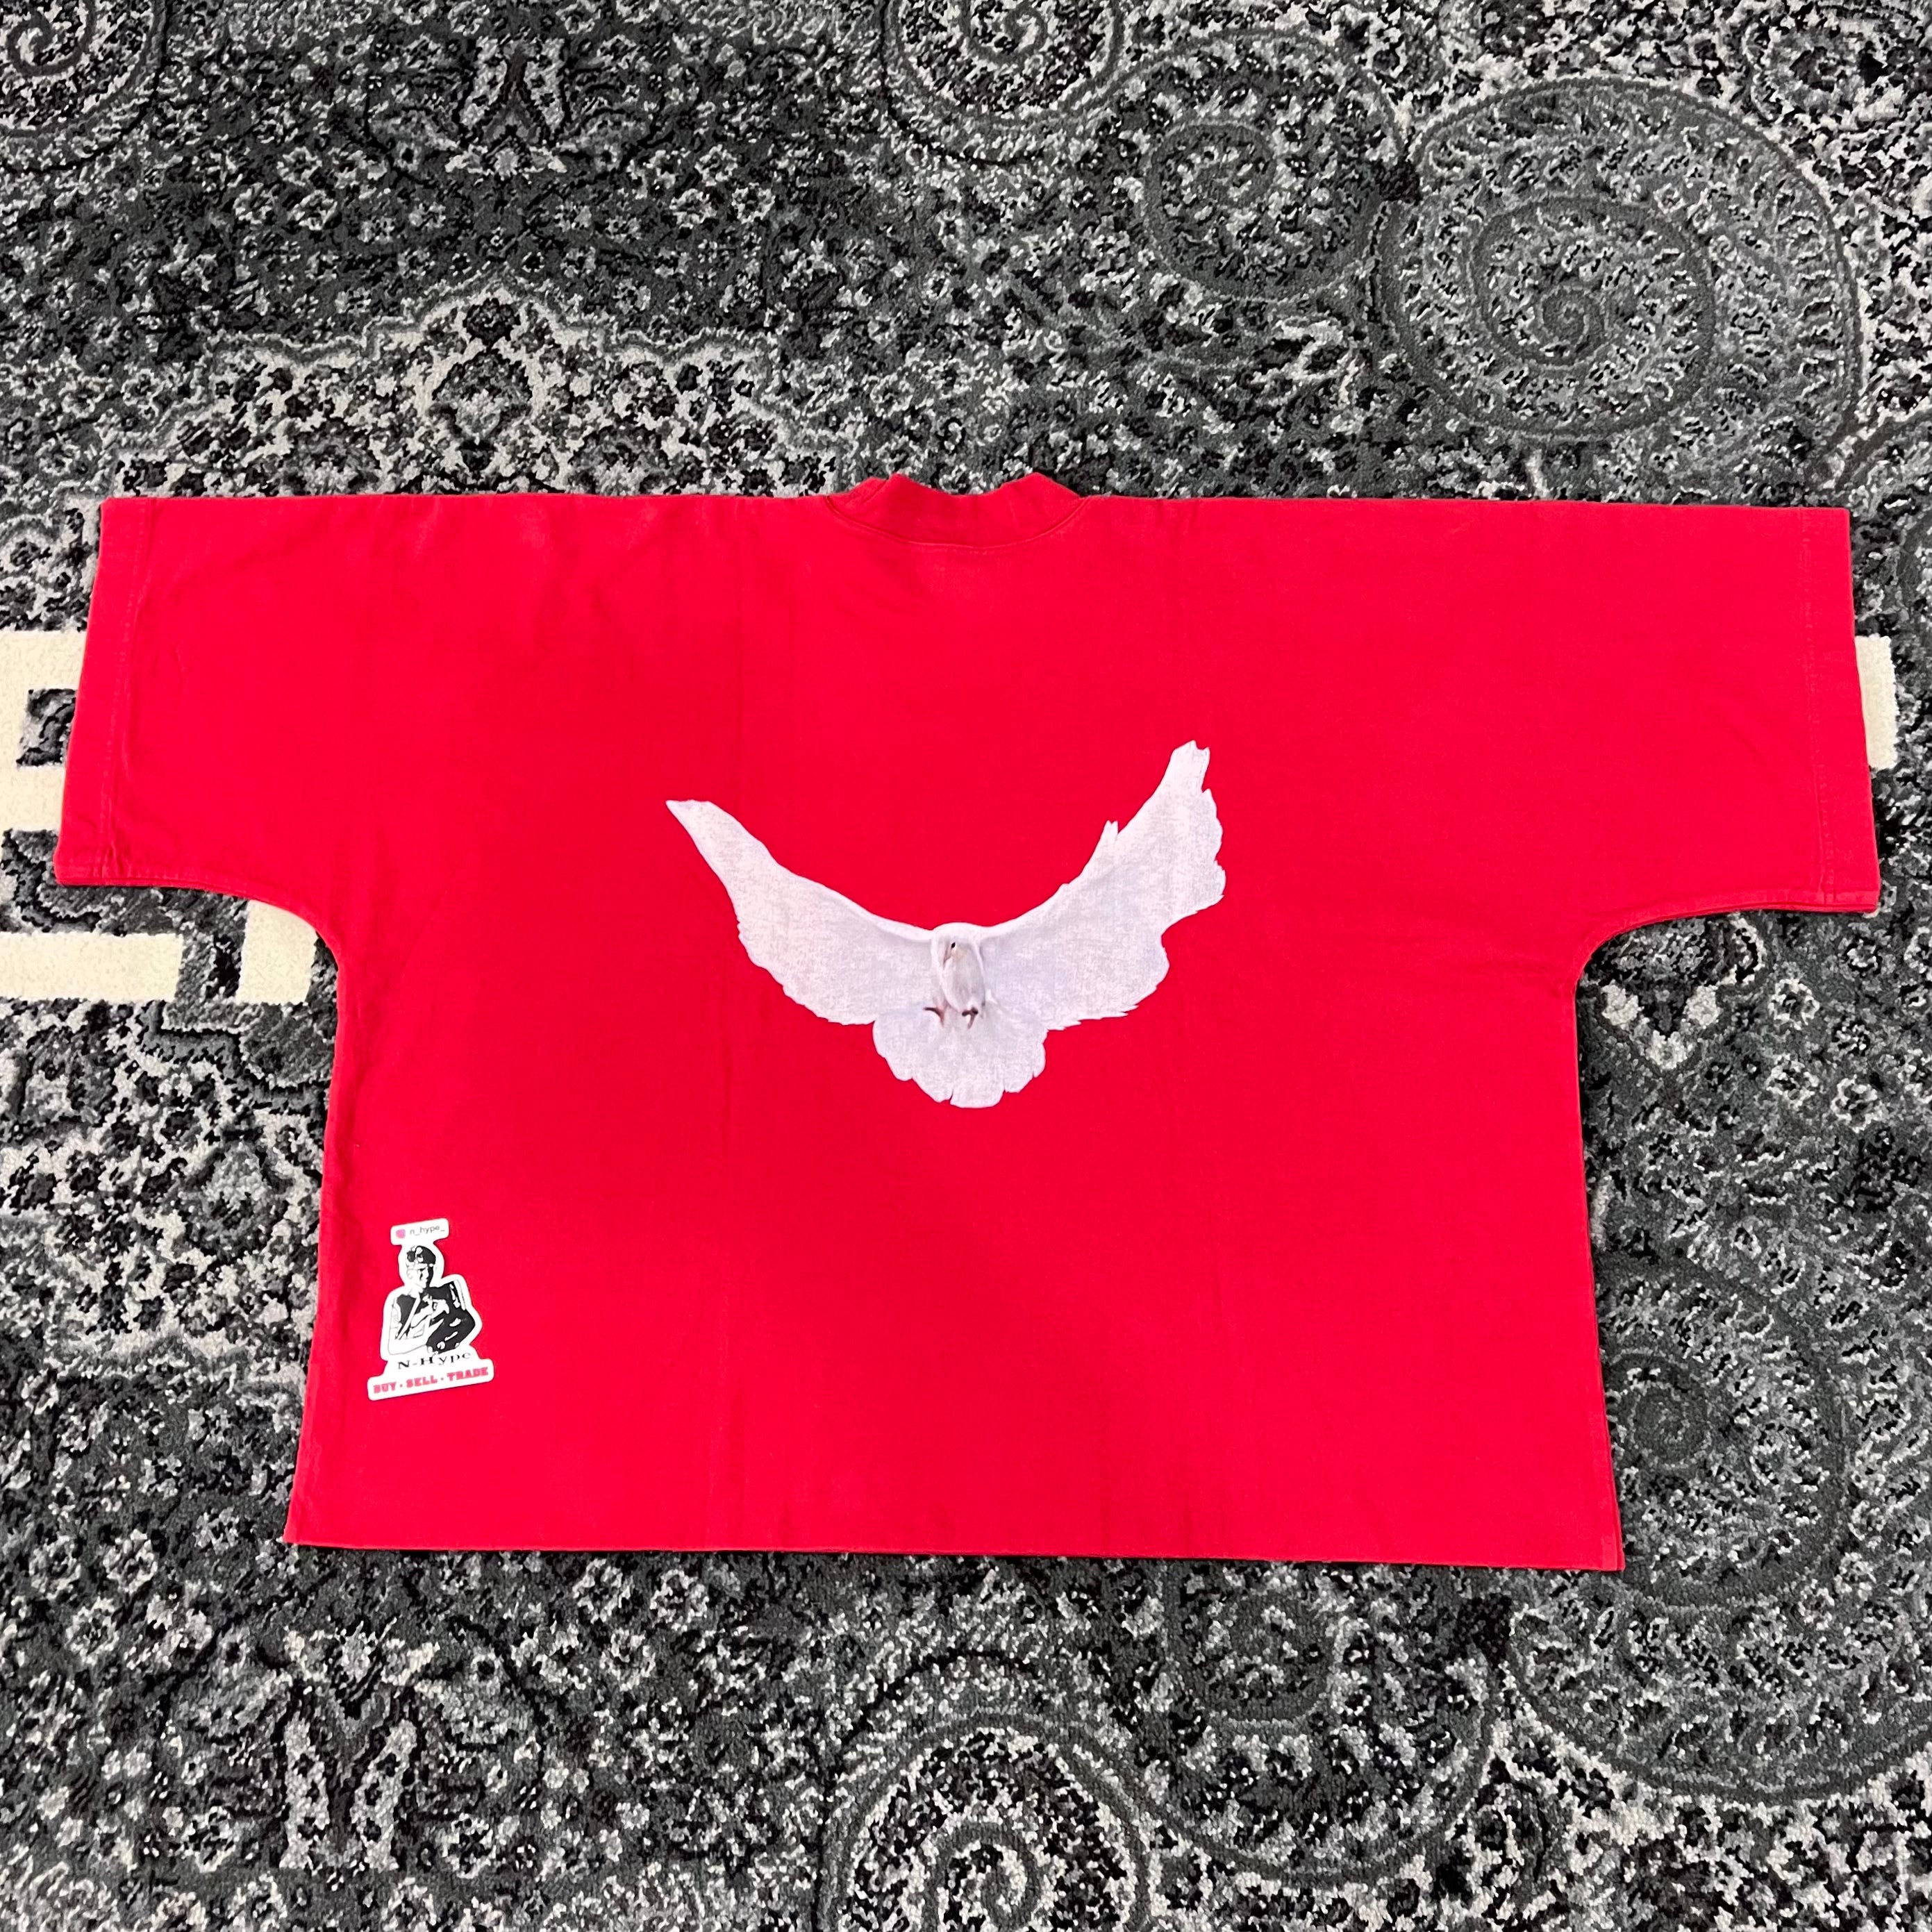 Yeezy Gap Engineered by Balenciaga T-Shirt Red Showroom NHype Lodz Polska 2